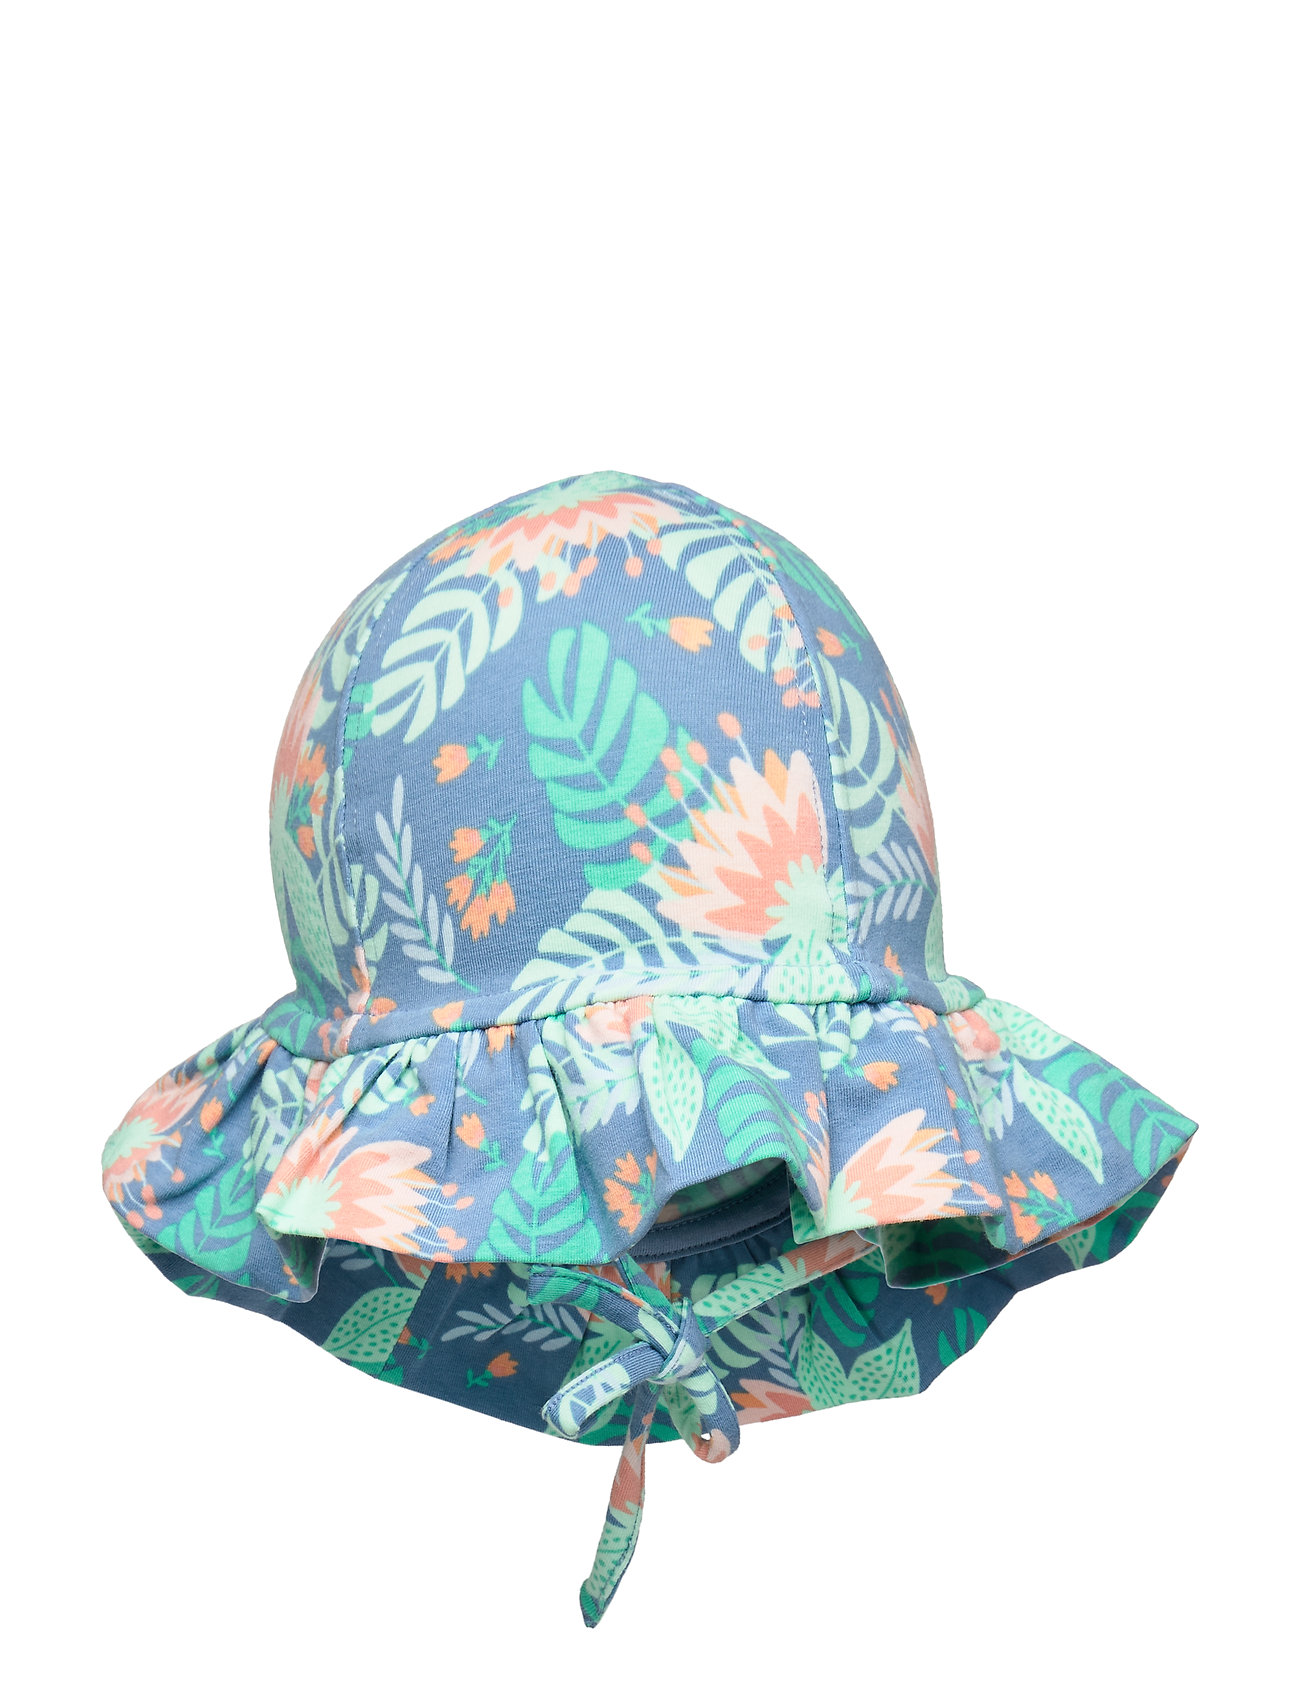 Sunhat Aop Baby Accessories Headwear Sun Hats Blå Polarn O. Pyret